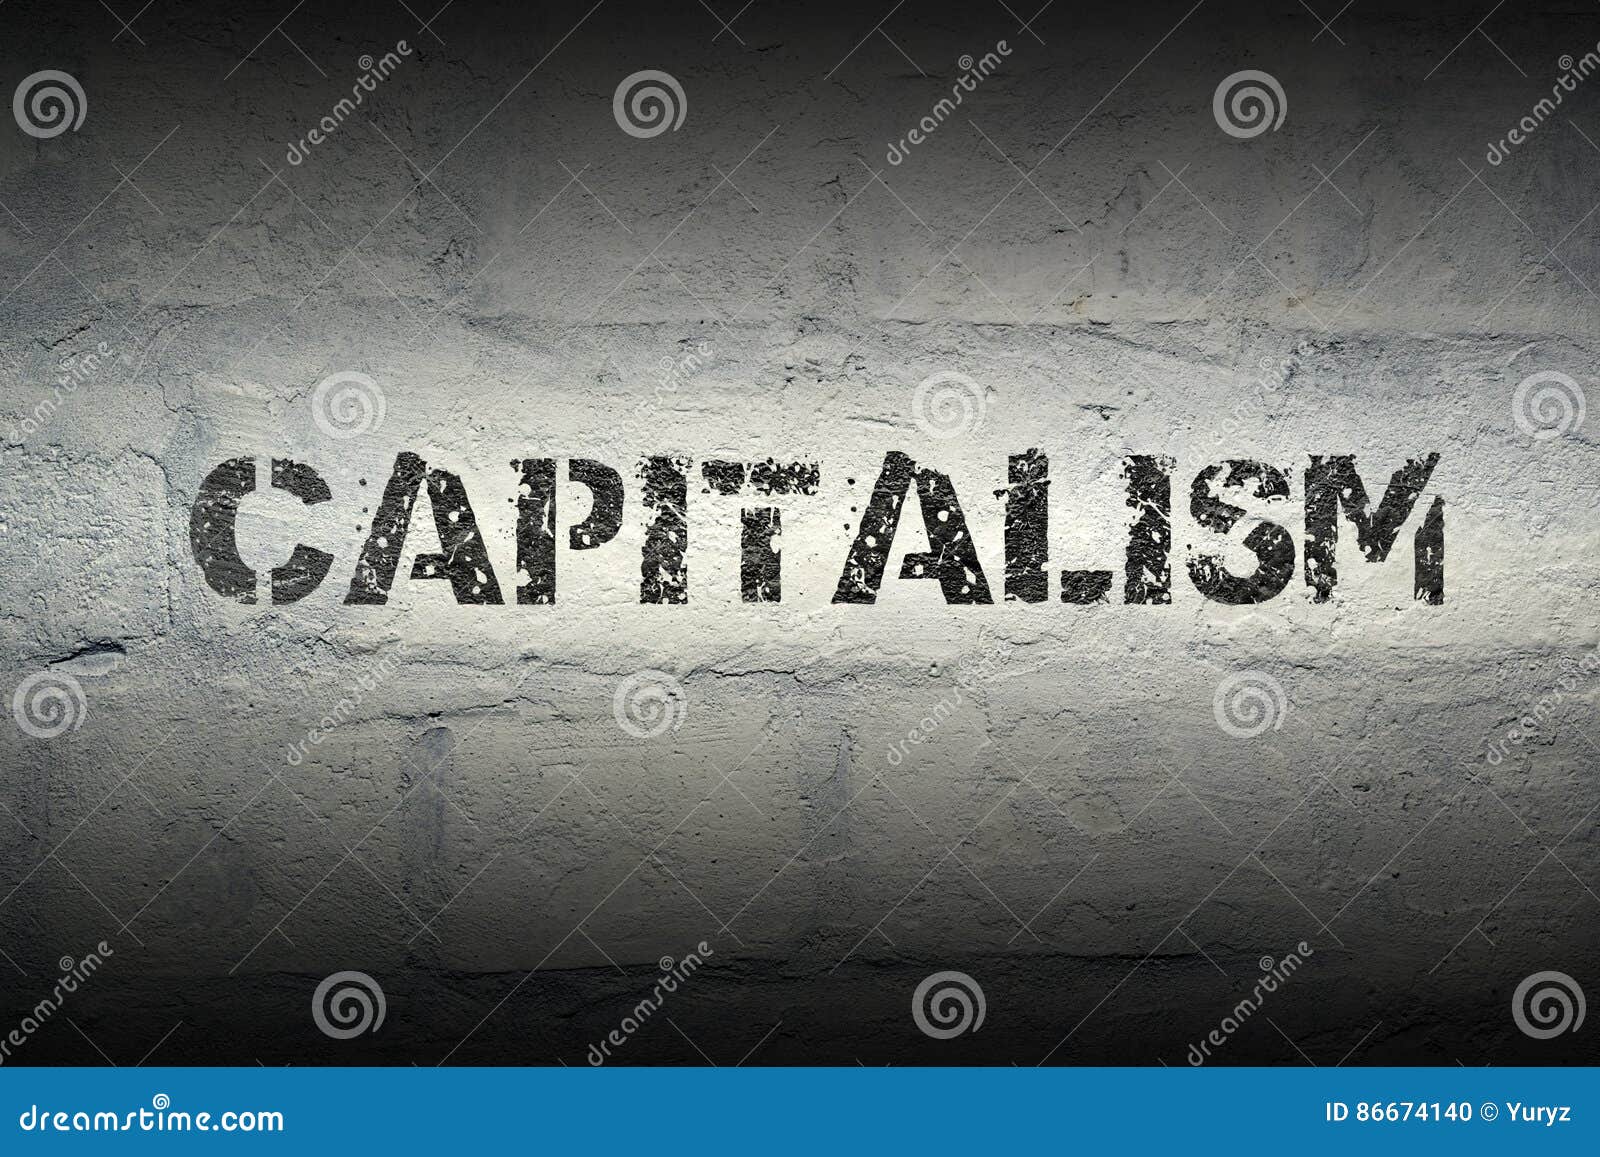 capitalism word grad